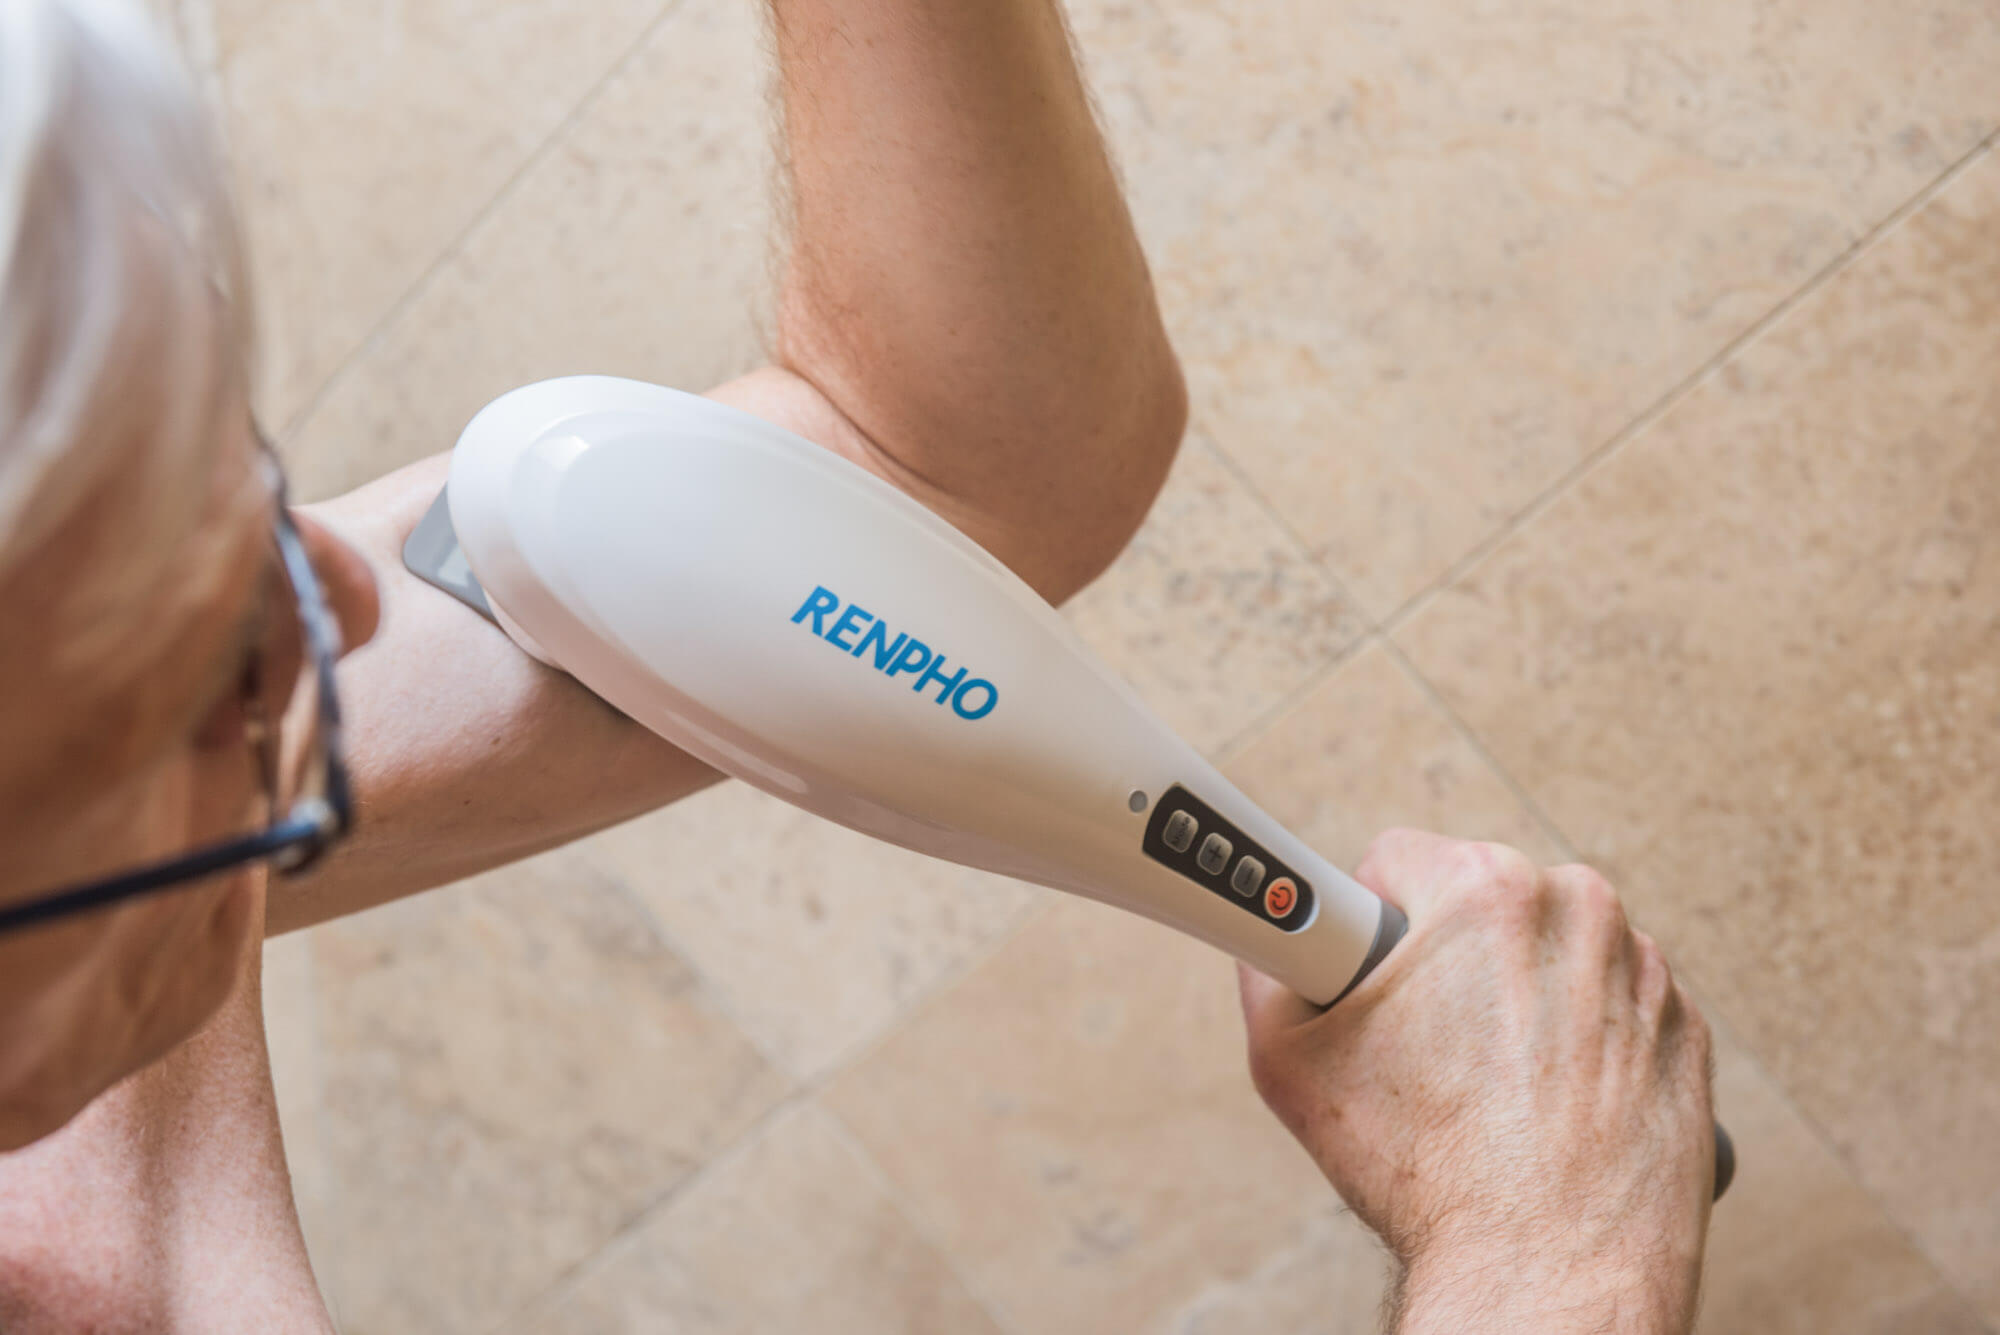 RENPHO Back Massager Handheld Rechargeable Hand Held Massage for Back,  Neck, Leg, Foot, Deep Tissue Muscle Massager